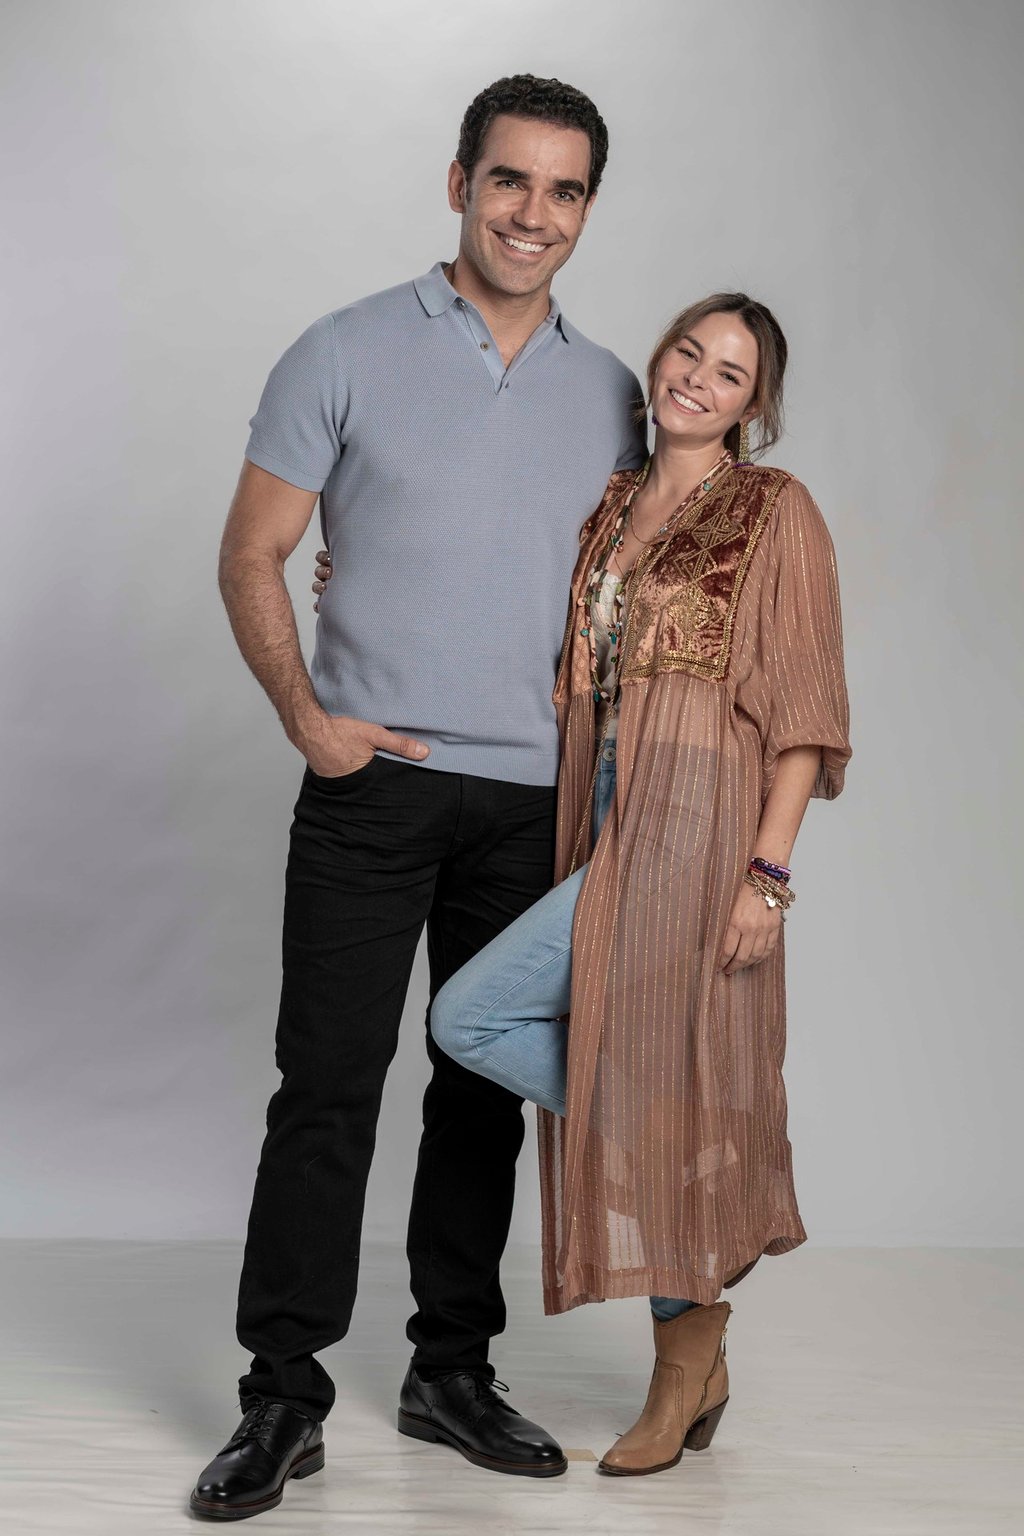 Alejandra y Marcus harán telenovela El Siglo